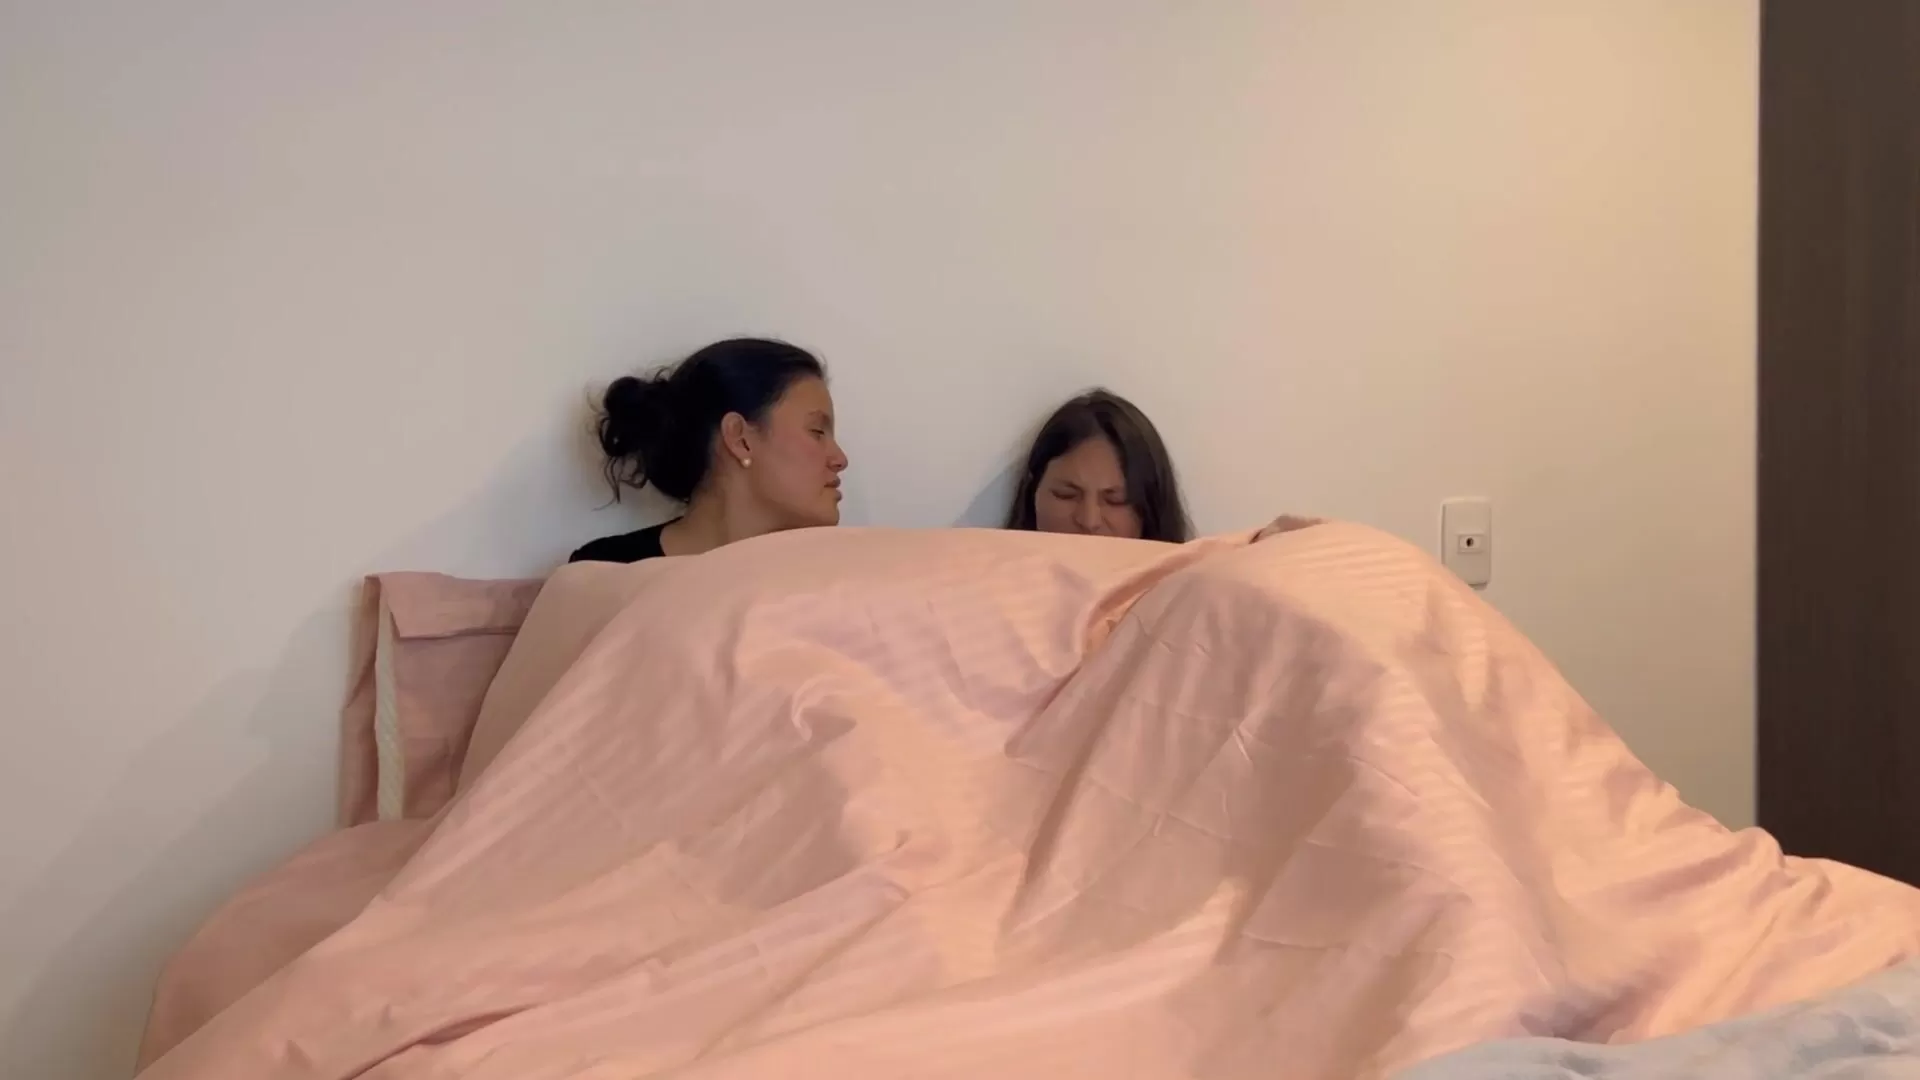 hus wife friend sleep together Porn Pics Hd